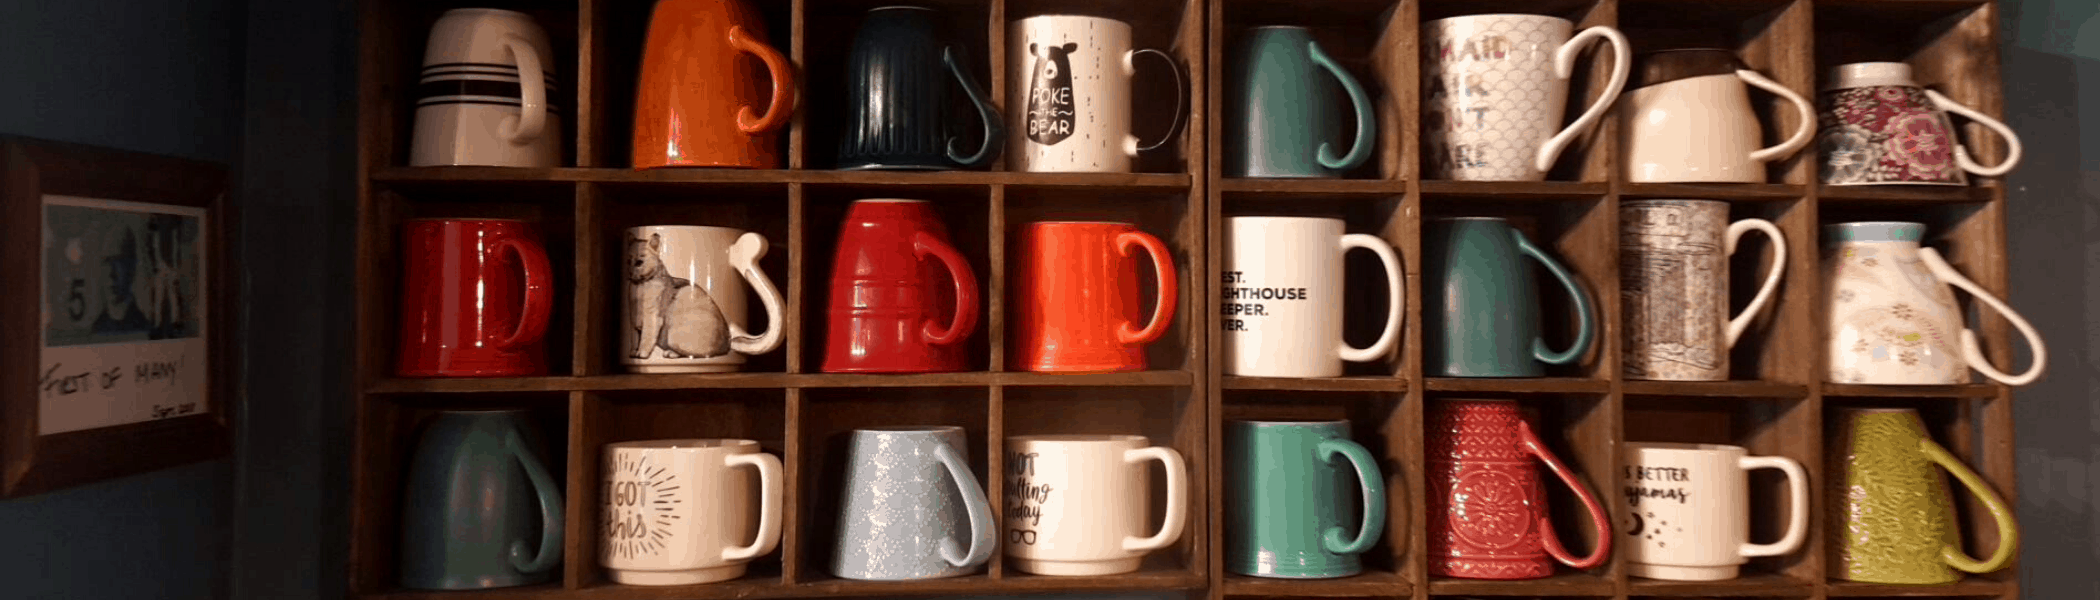 coffee cups on shelf